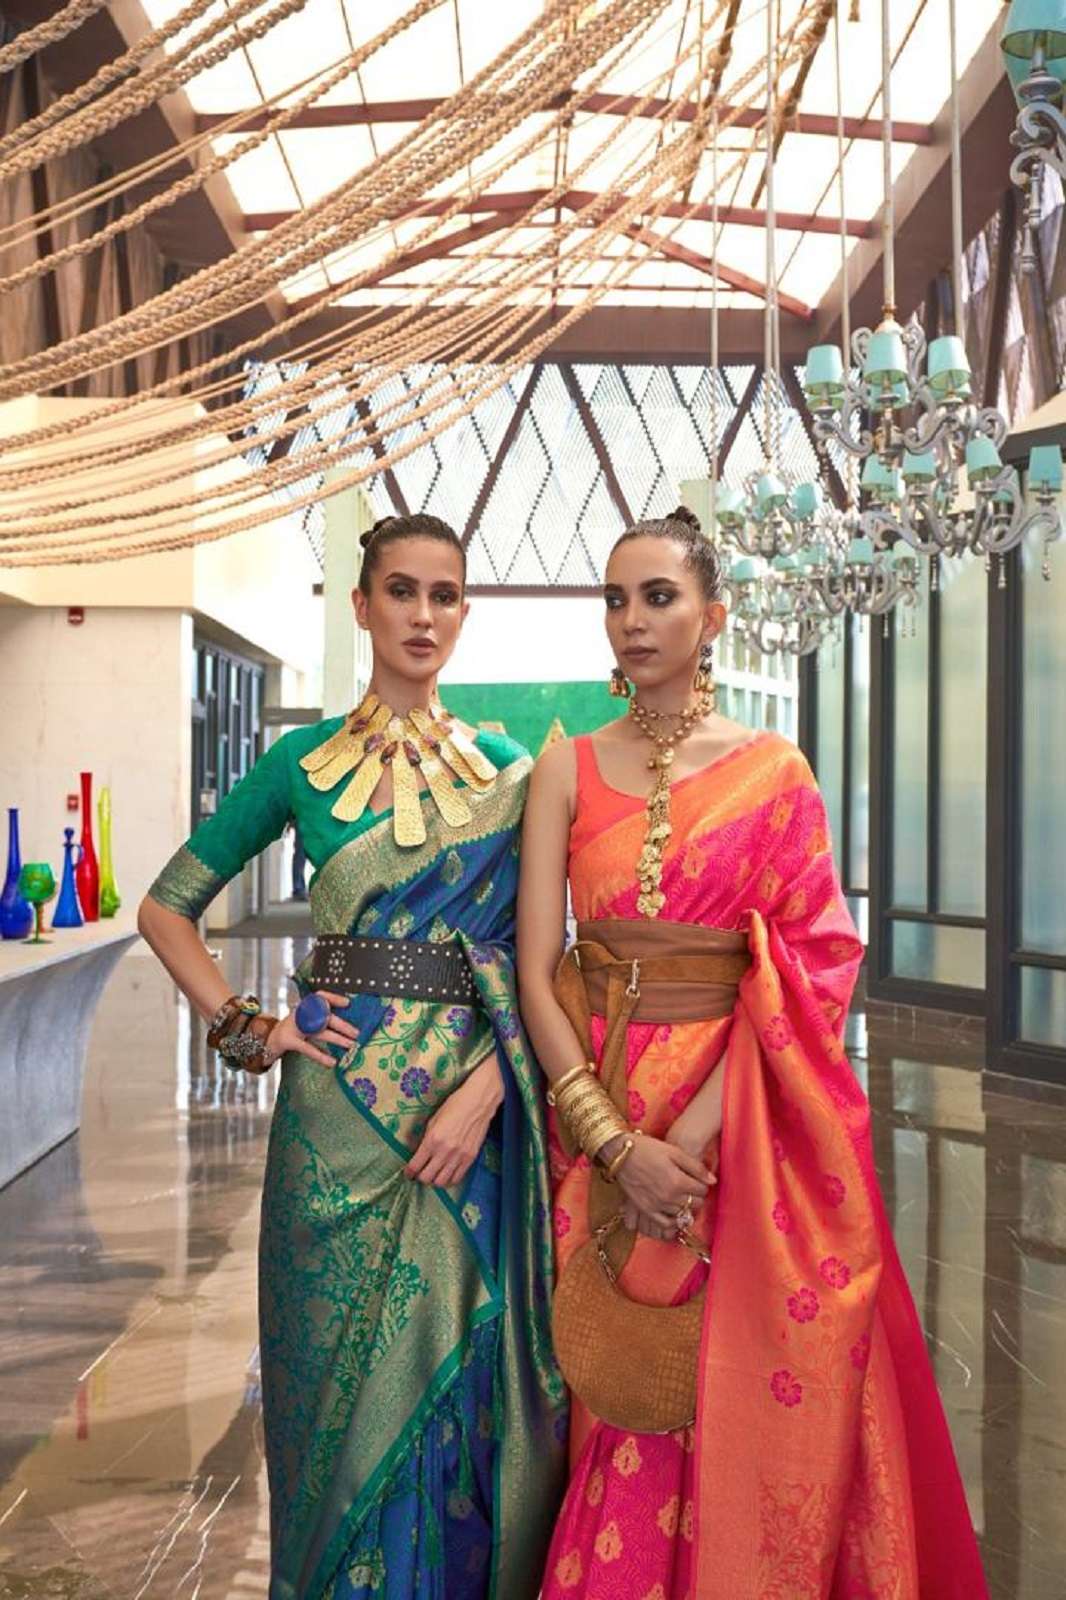 New Party Festival Sari Indian Wedding Wear Designer Ethnic